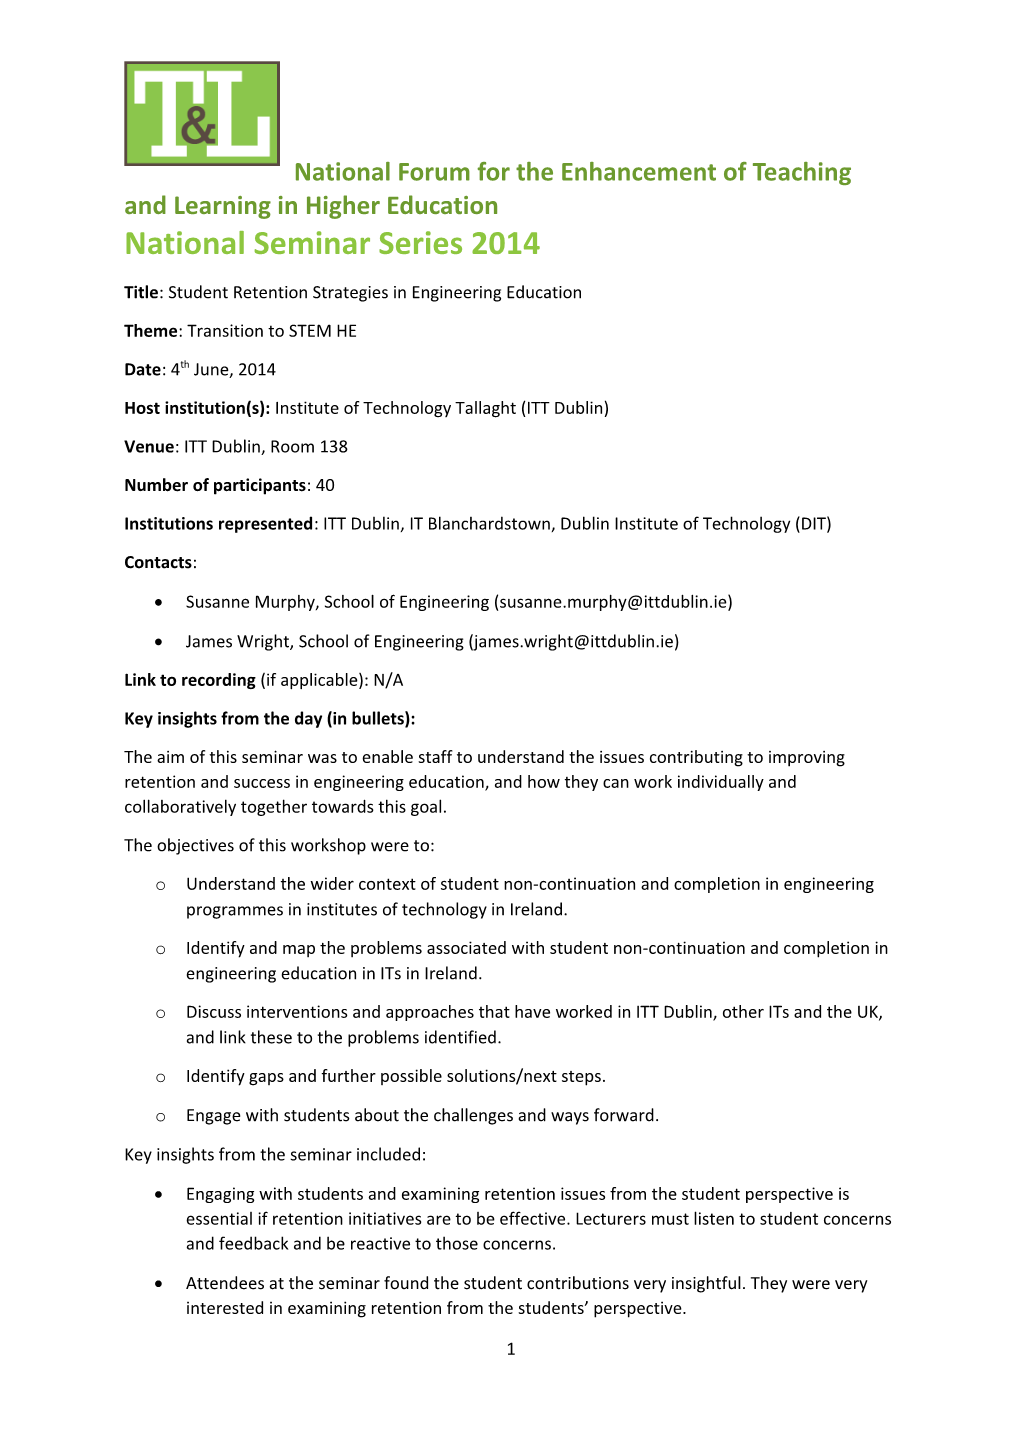 National Seminar Series 2014